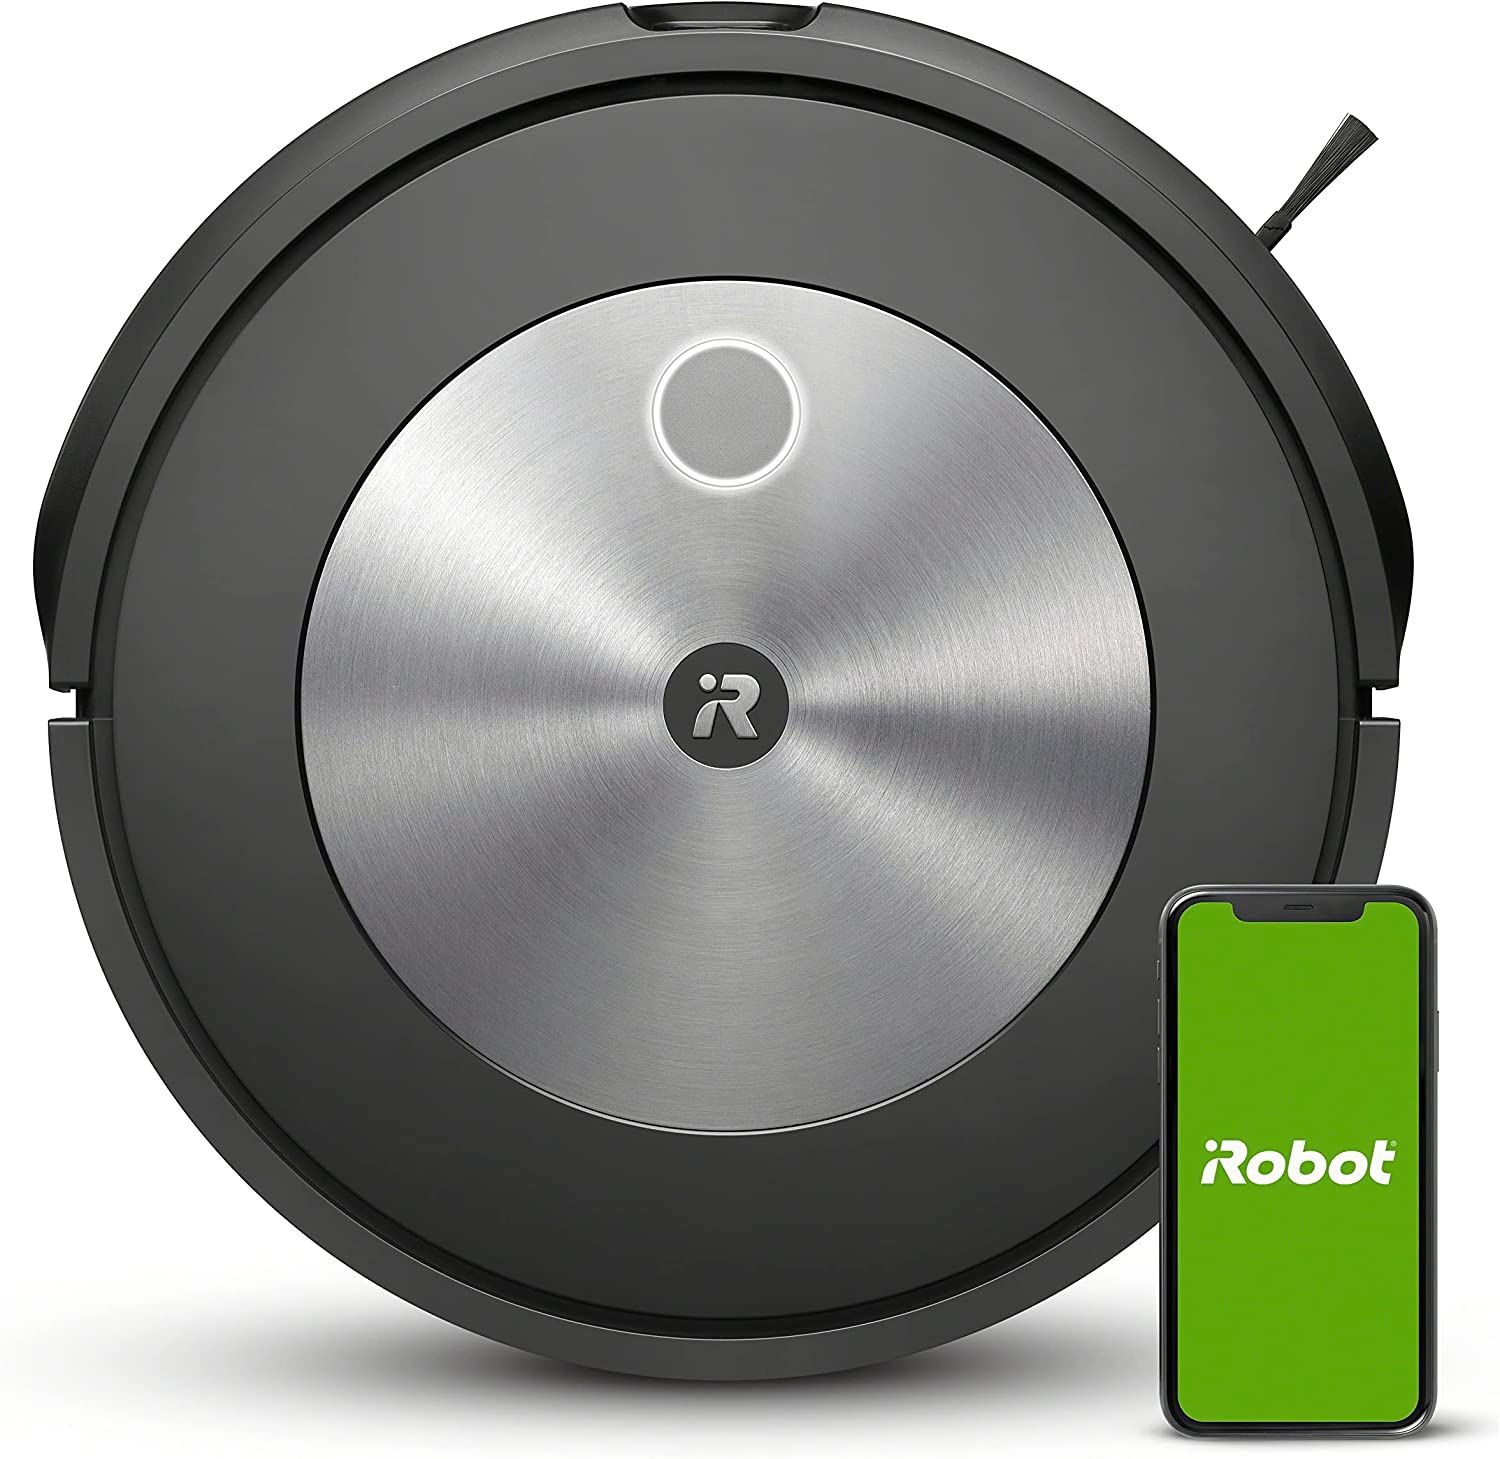 iRobot - Roomba j7 (715020) Wi-Fi Connected Robot Vacuum - Graphite